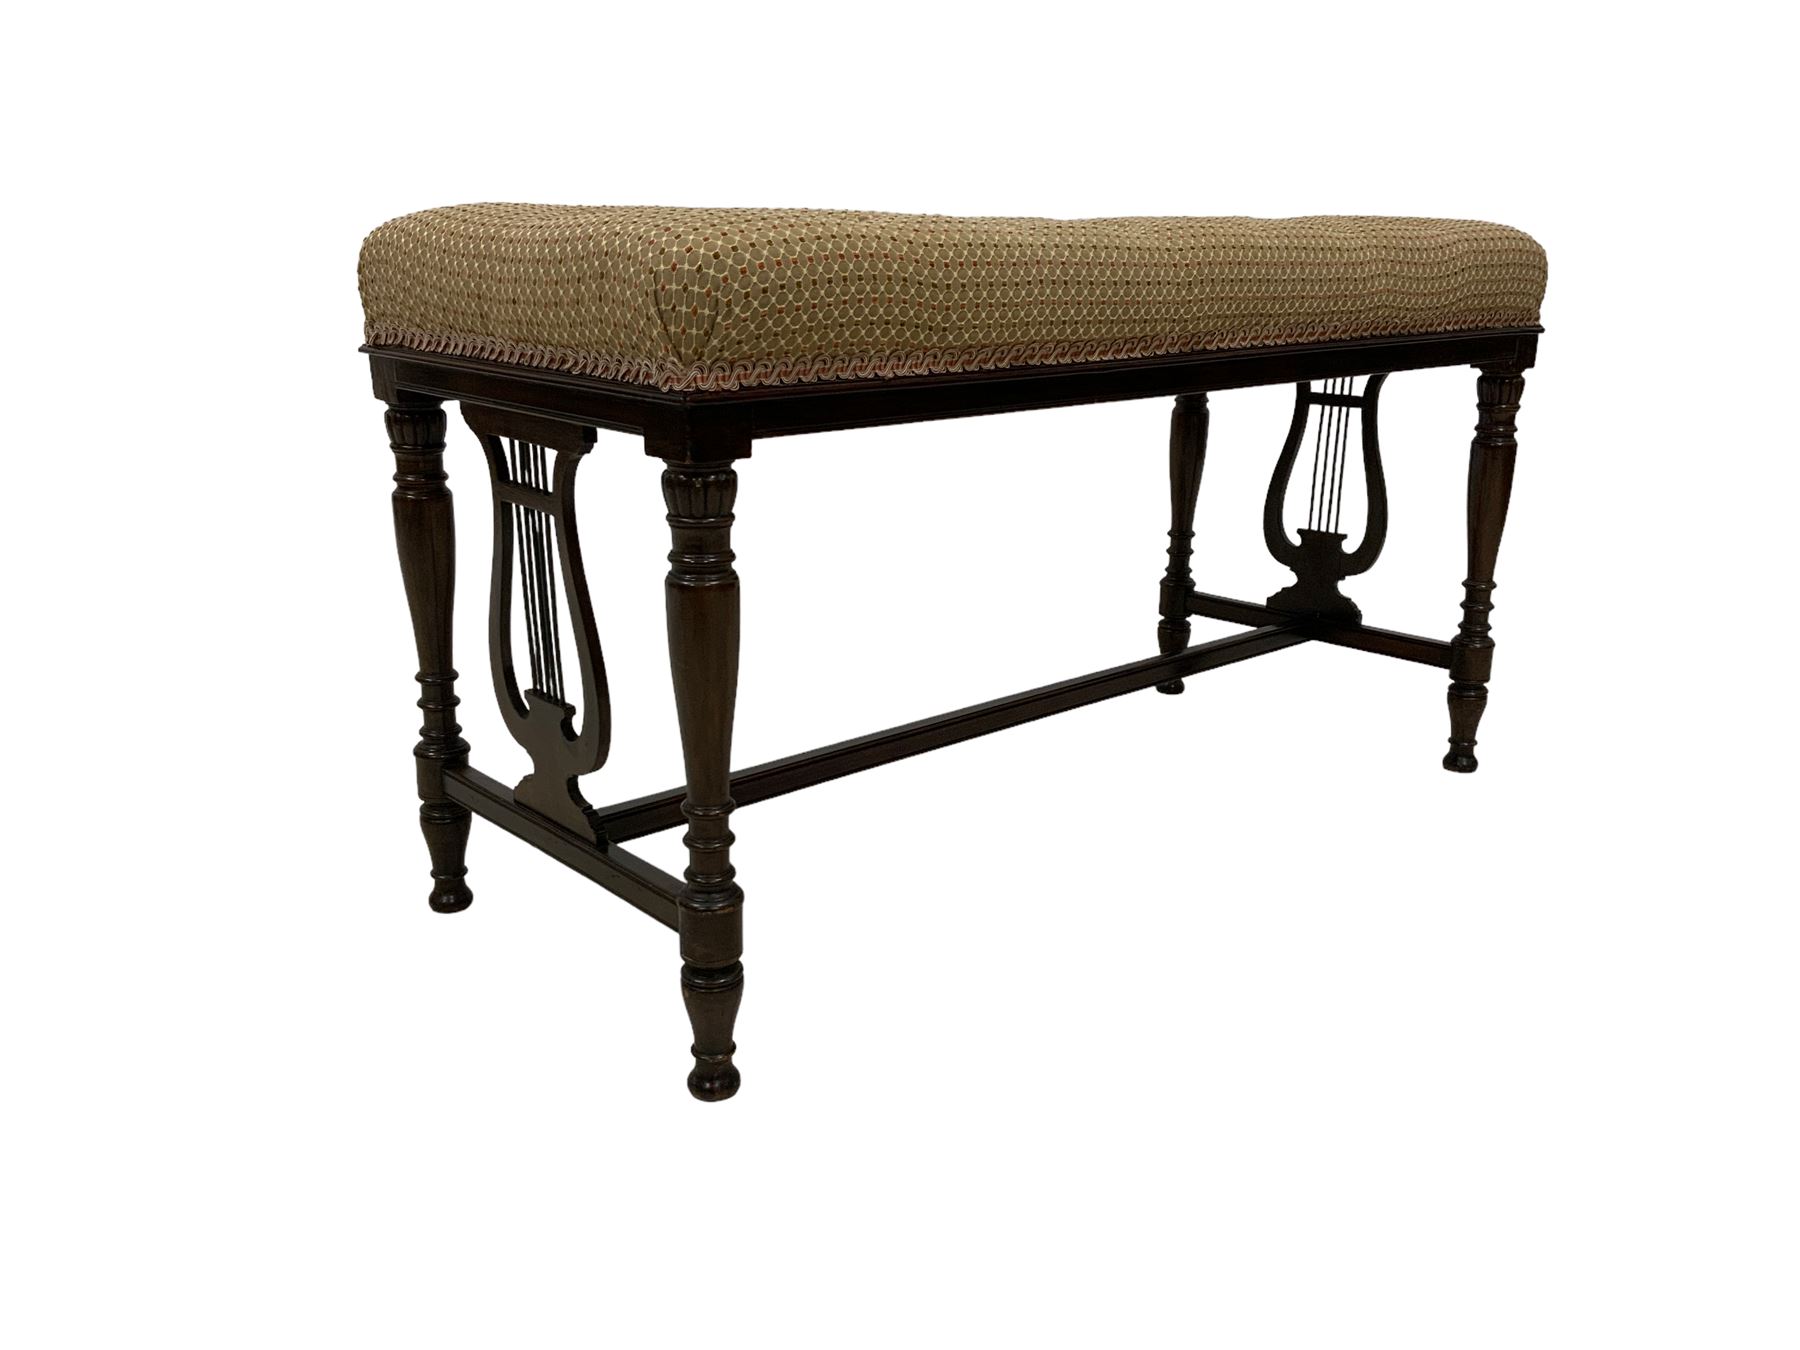 Regency design walnut piano duet stool - Image 4 of 8